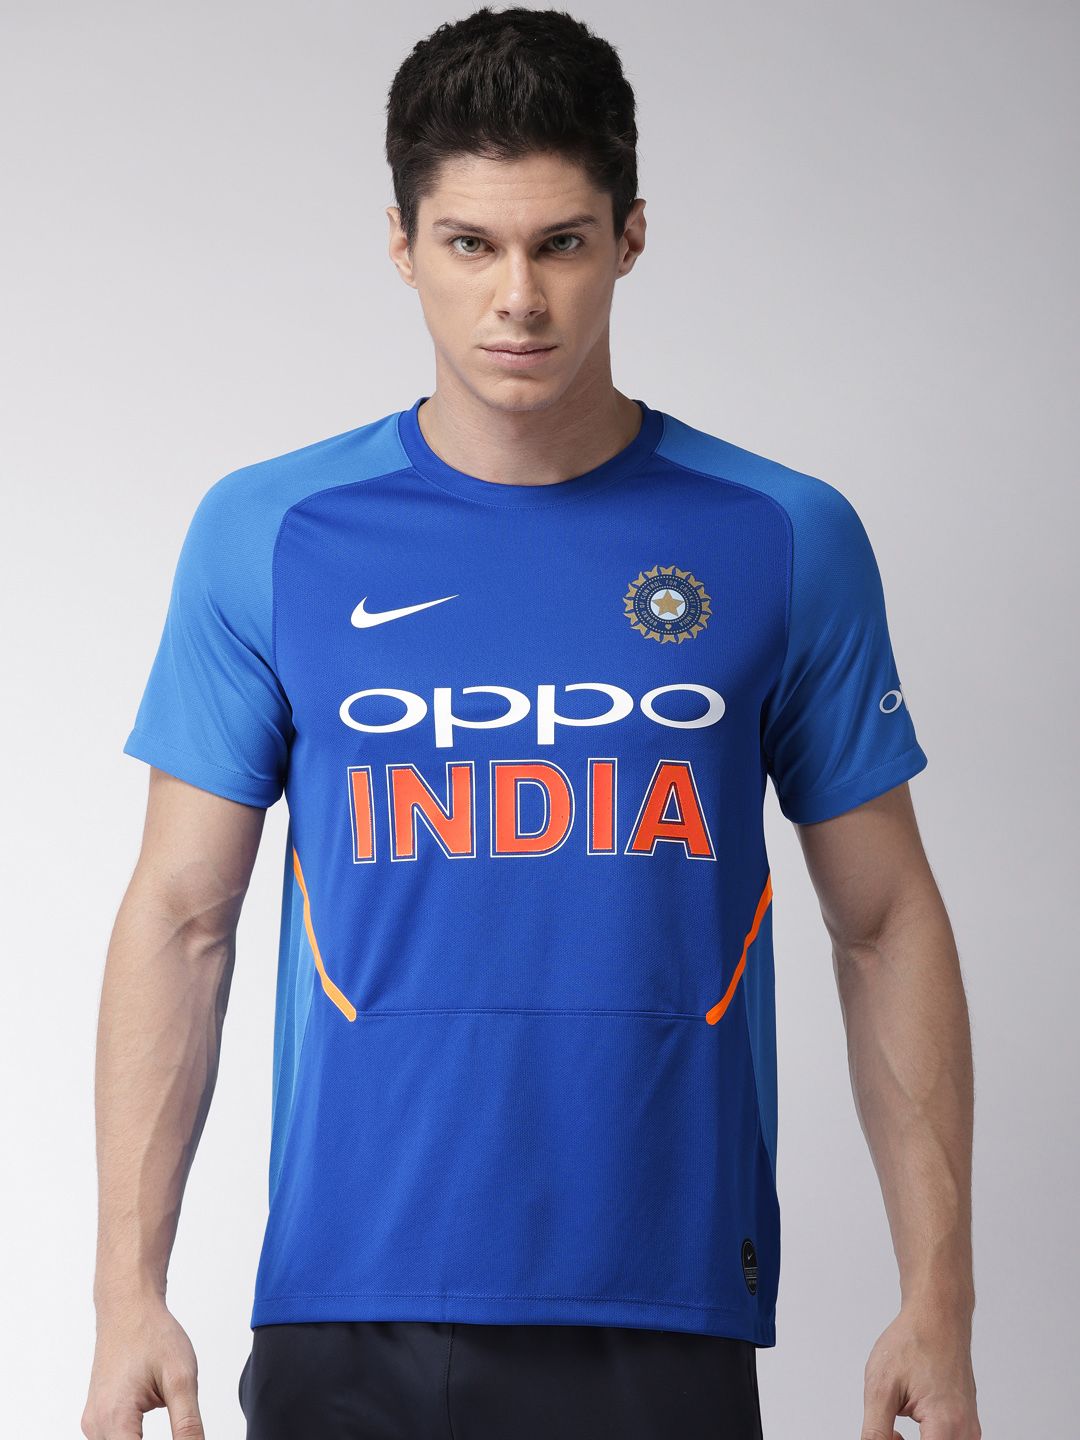 indian cricket jersey nike